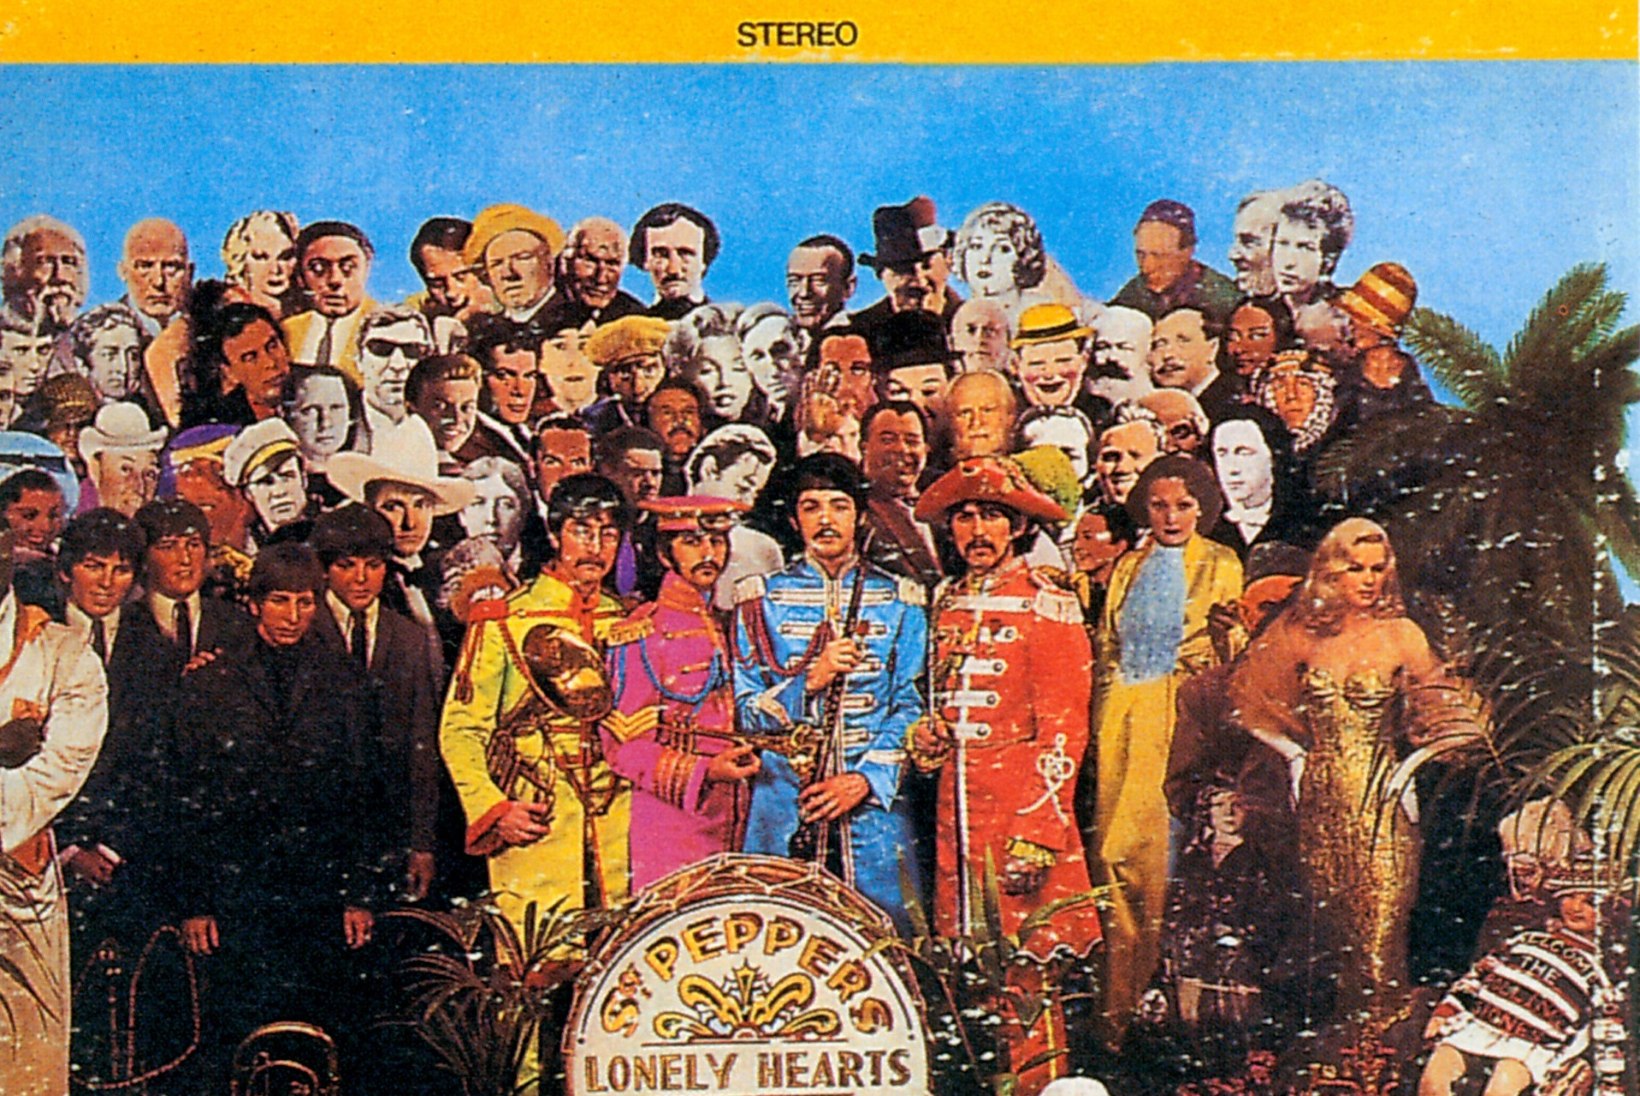 50 fakti ansambli The Beatles albumist "Sgt Pepper’s Lonely Hearts Club Band"